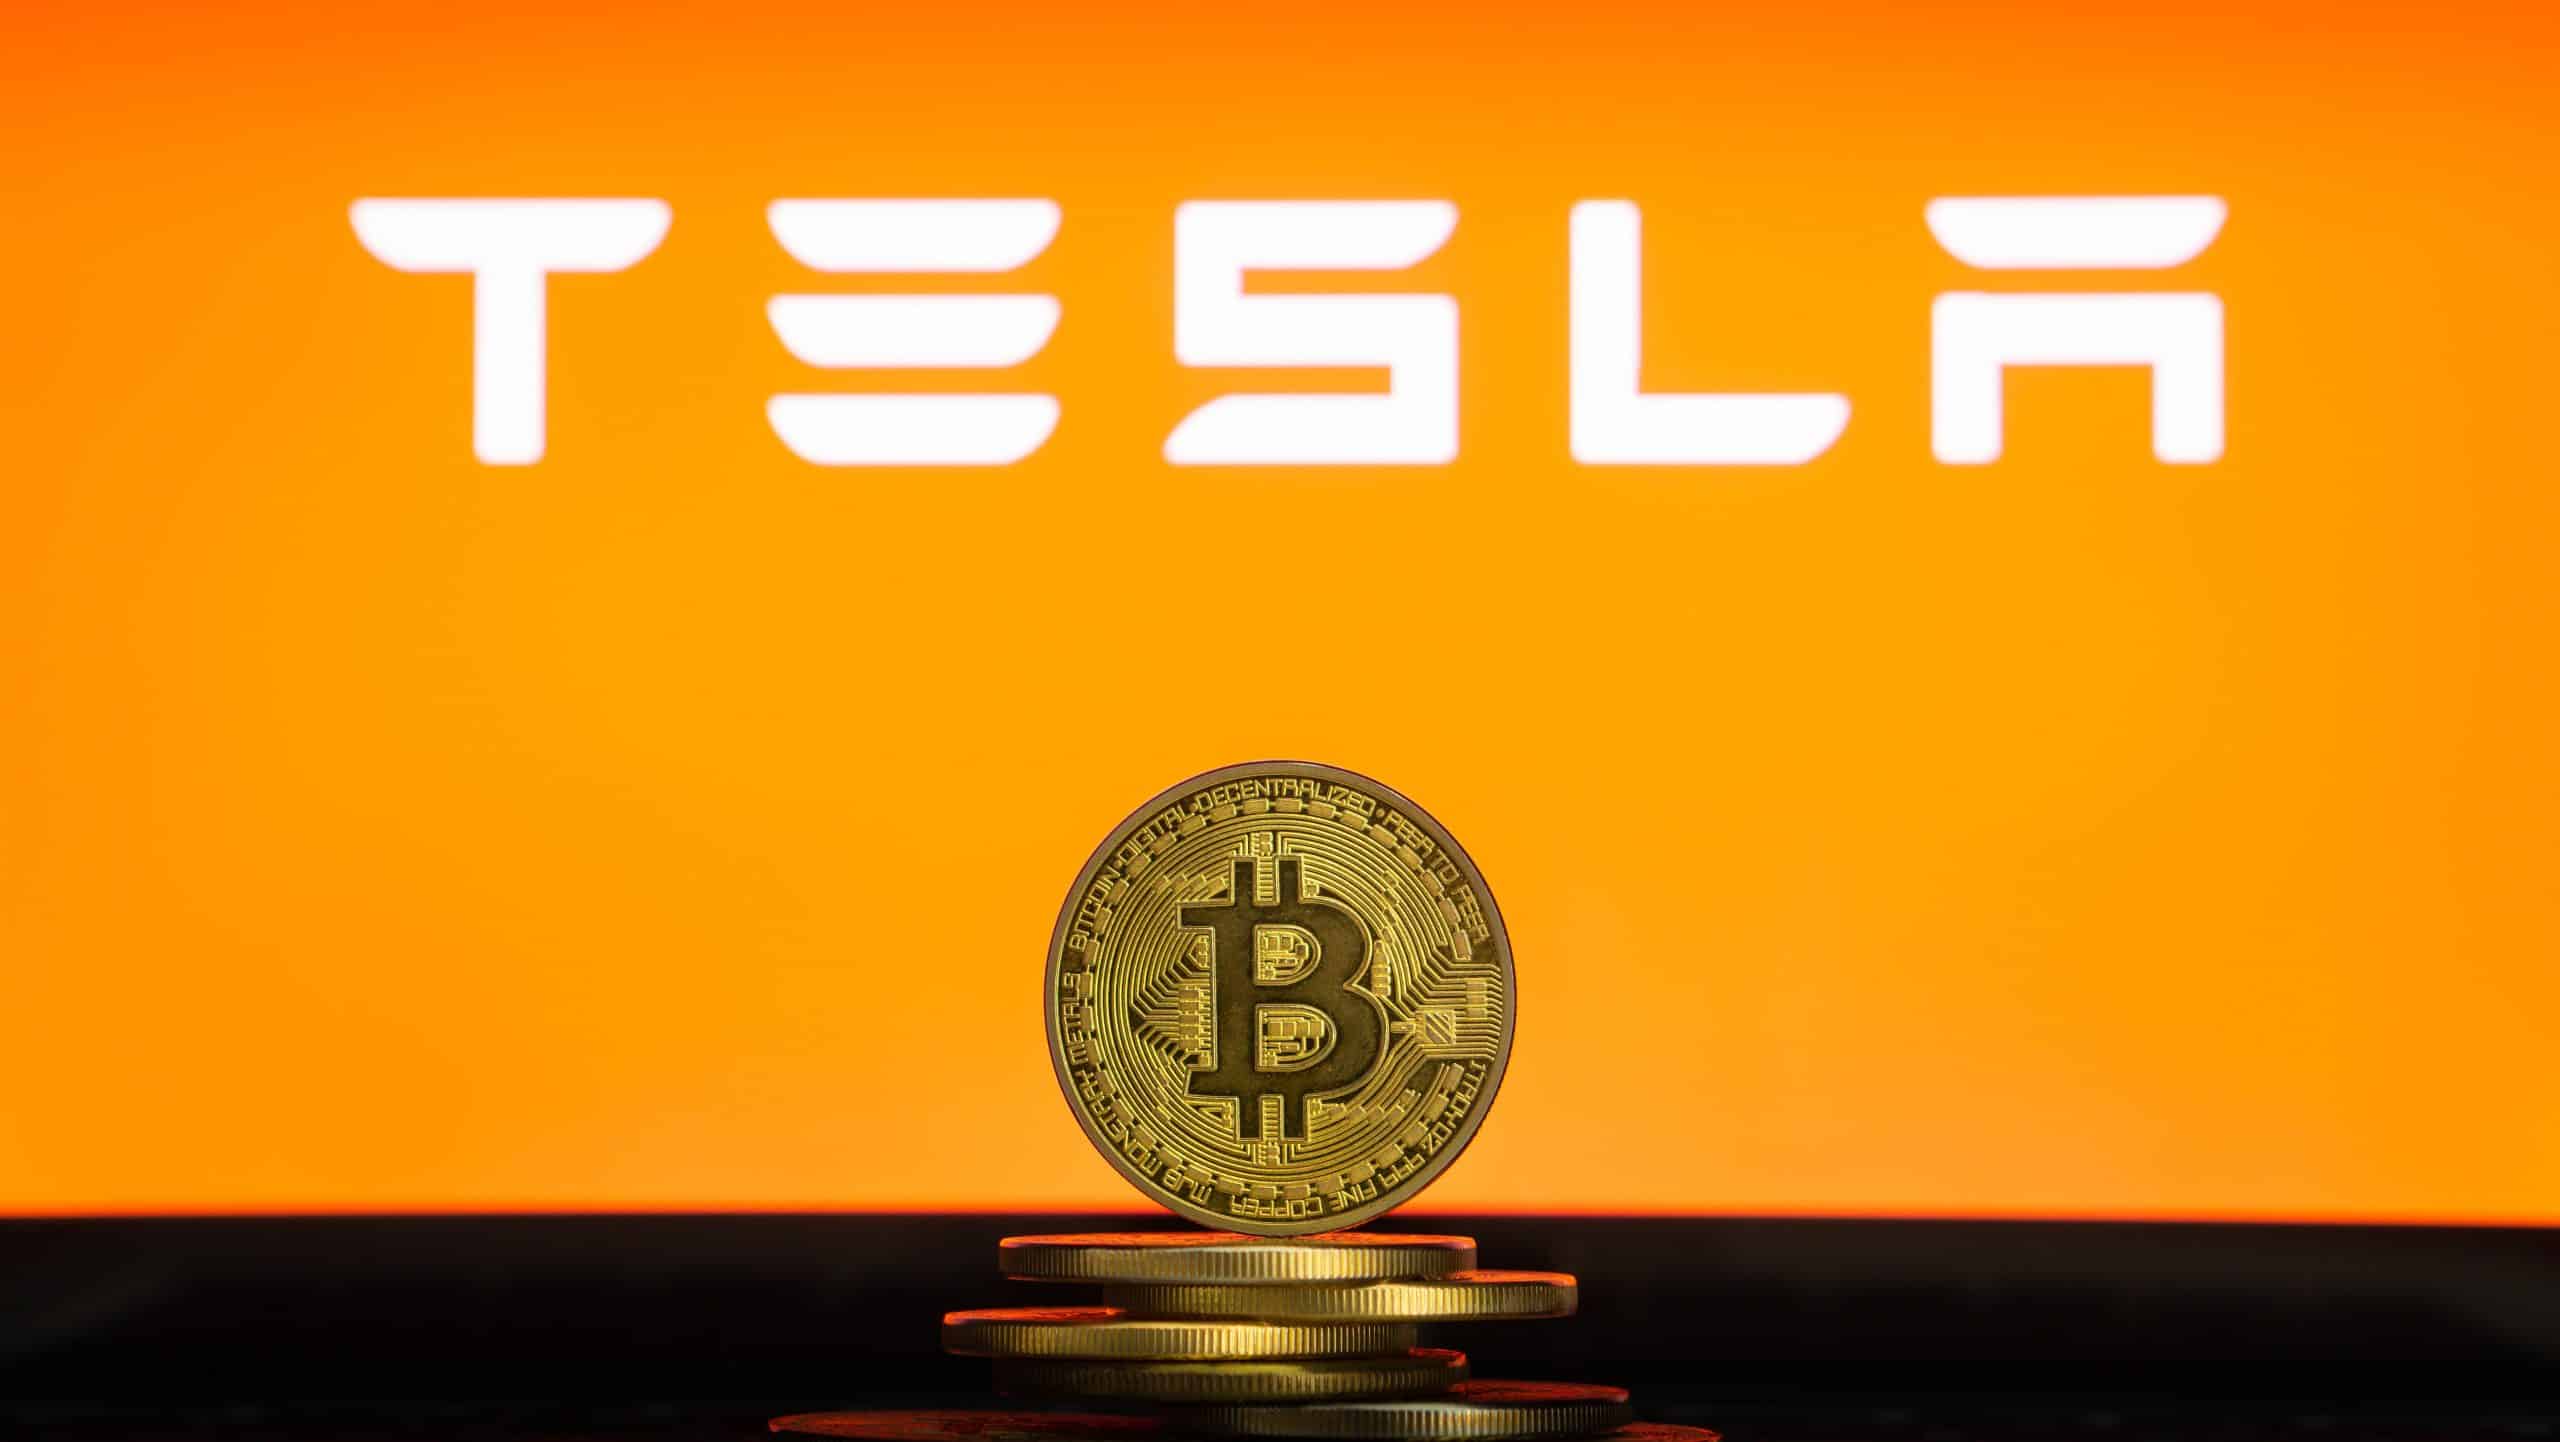 Tesla will resume Bitcoin transactions when miners use renewable energy: Elon Musk